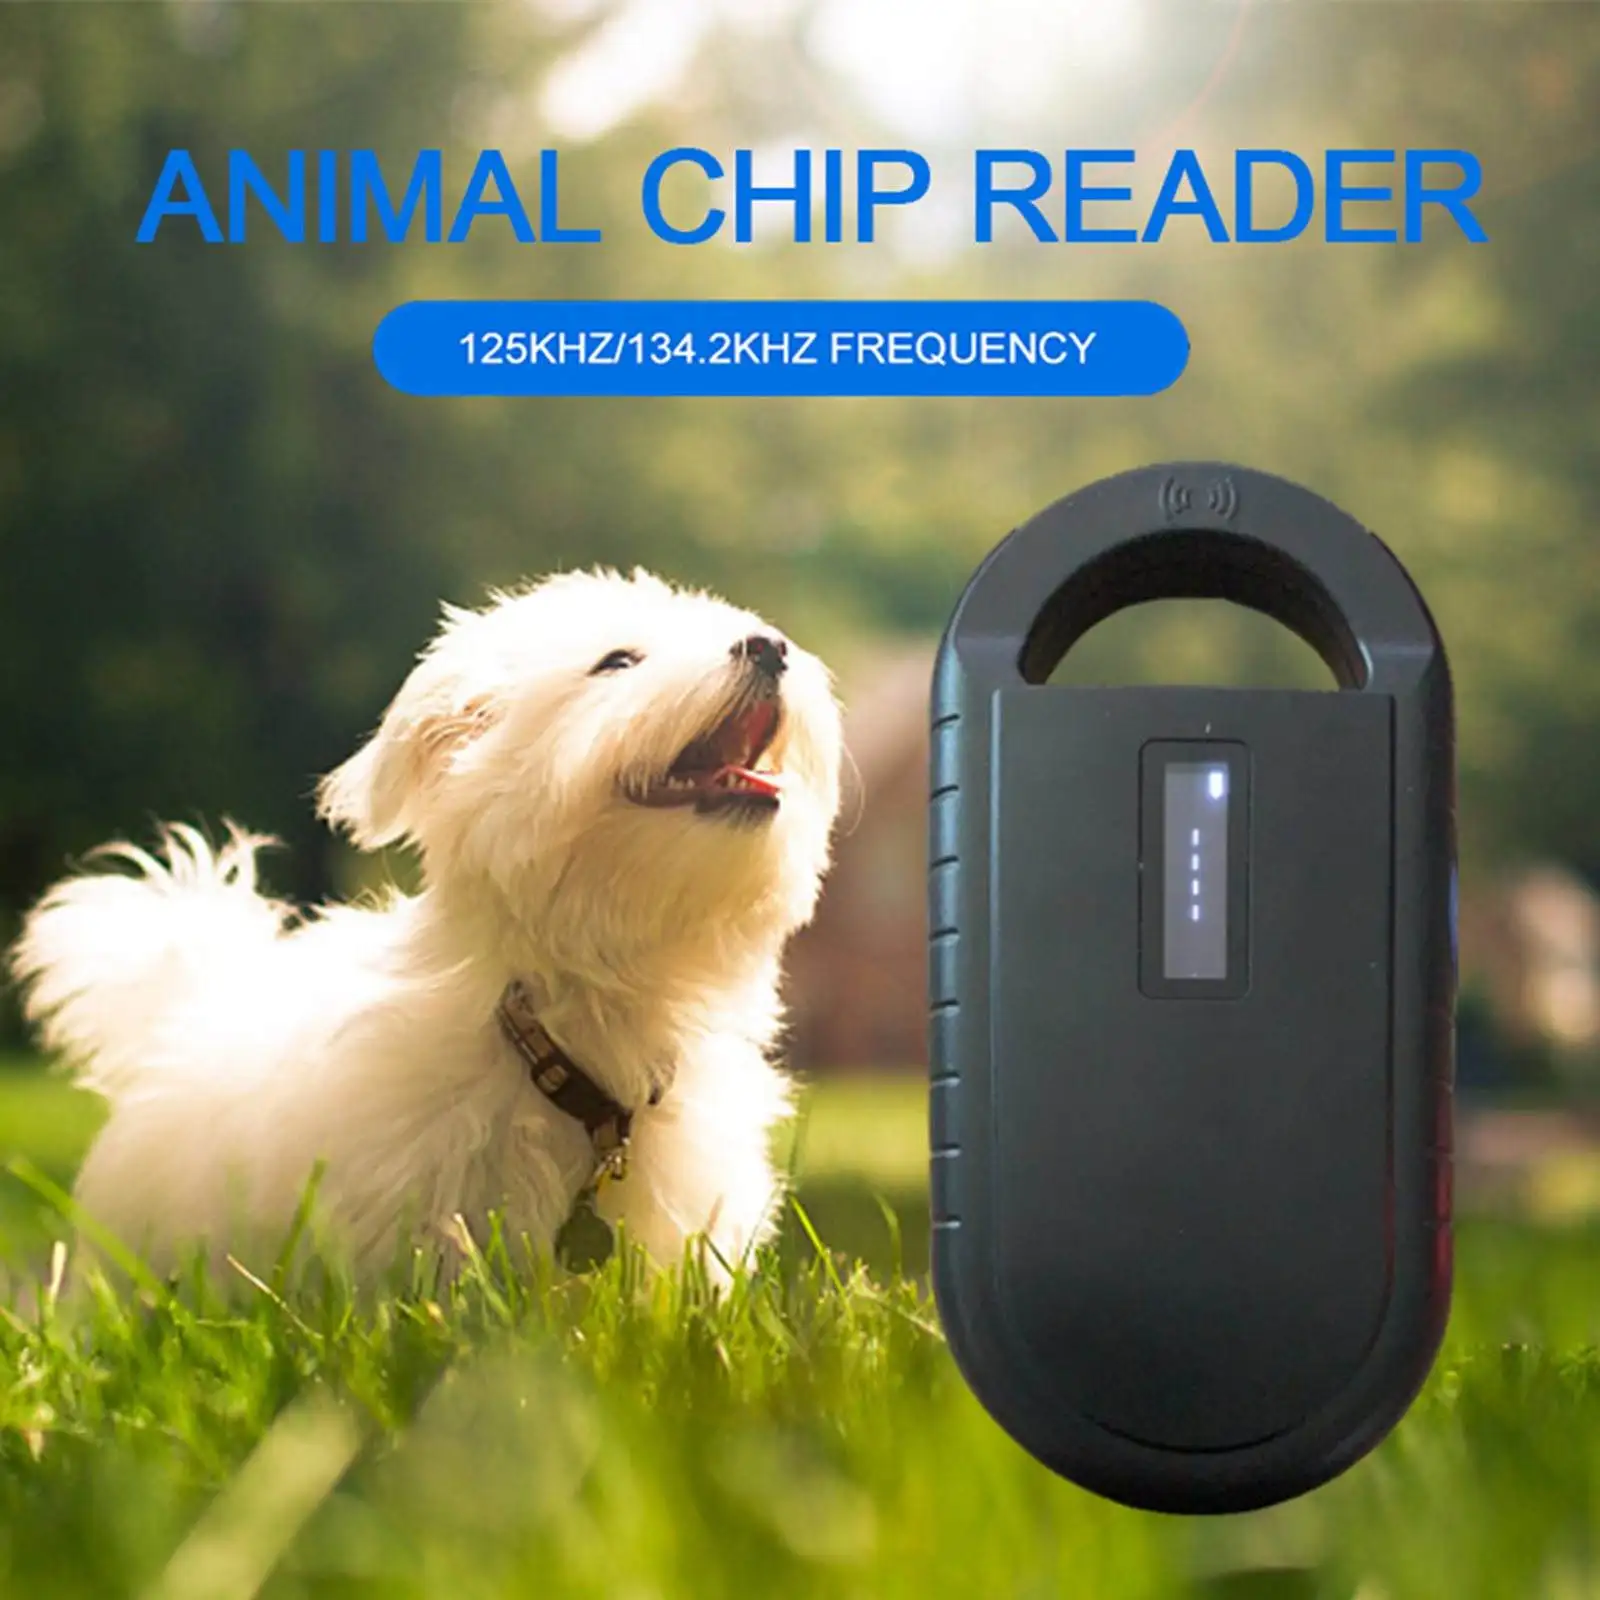 Universal Pet ID Reader 134.2KHz USB Fdx-B Portable RFID Emid Digital Pet Tag Scanner Tag for Horse Dogs Tracking Identification